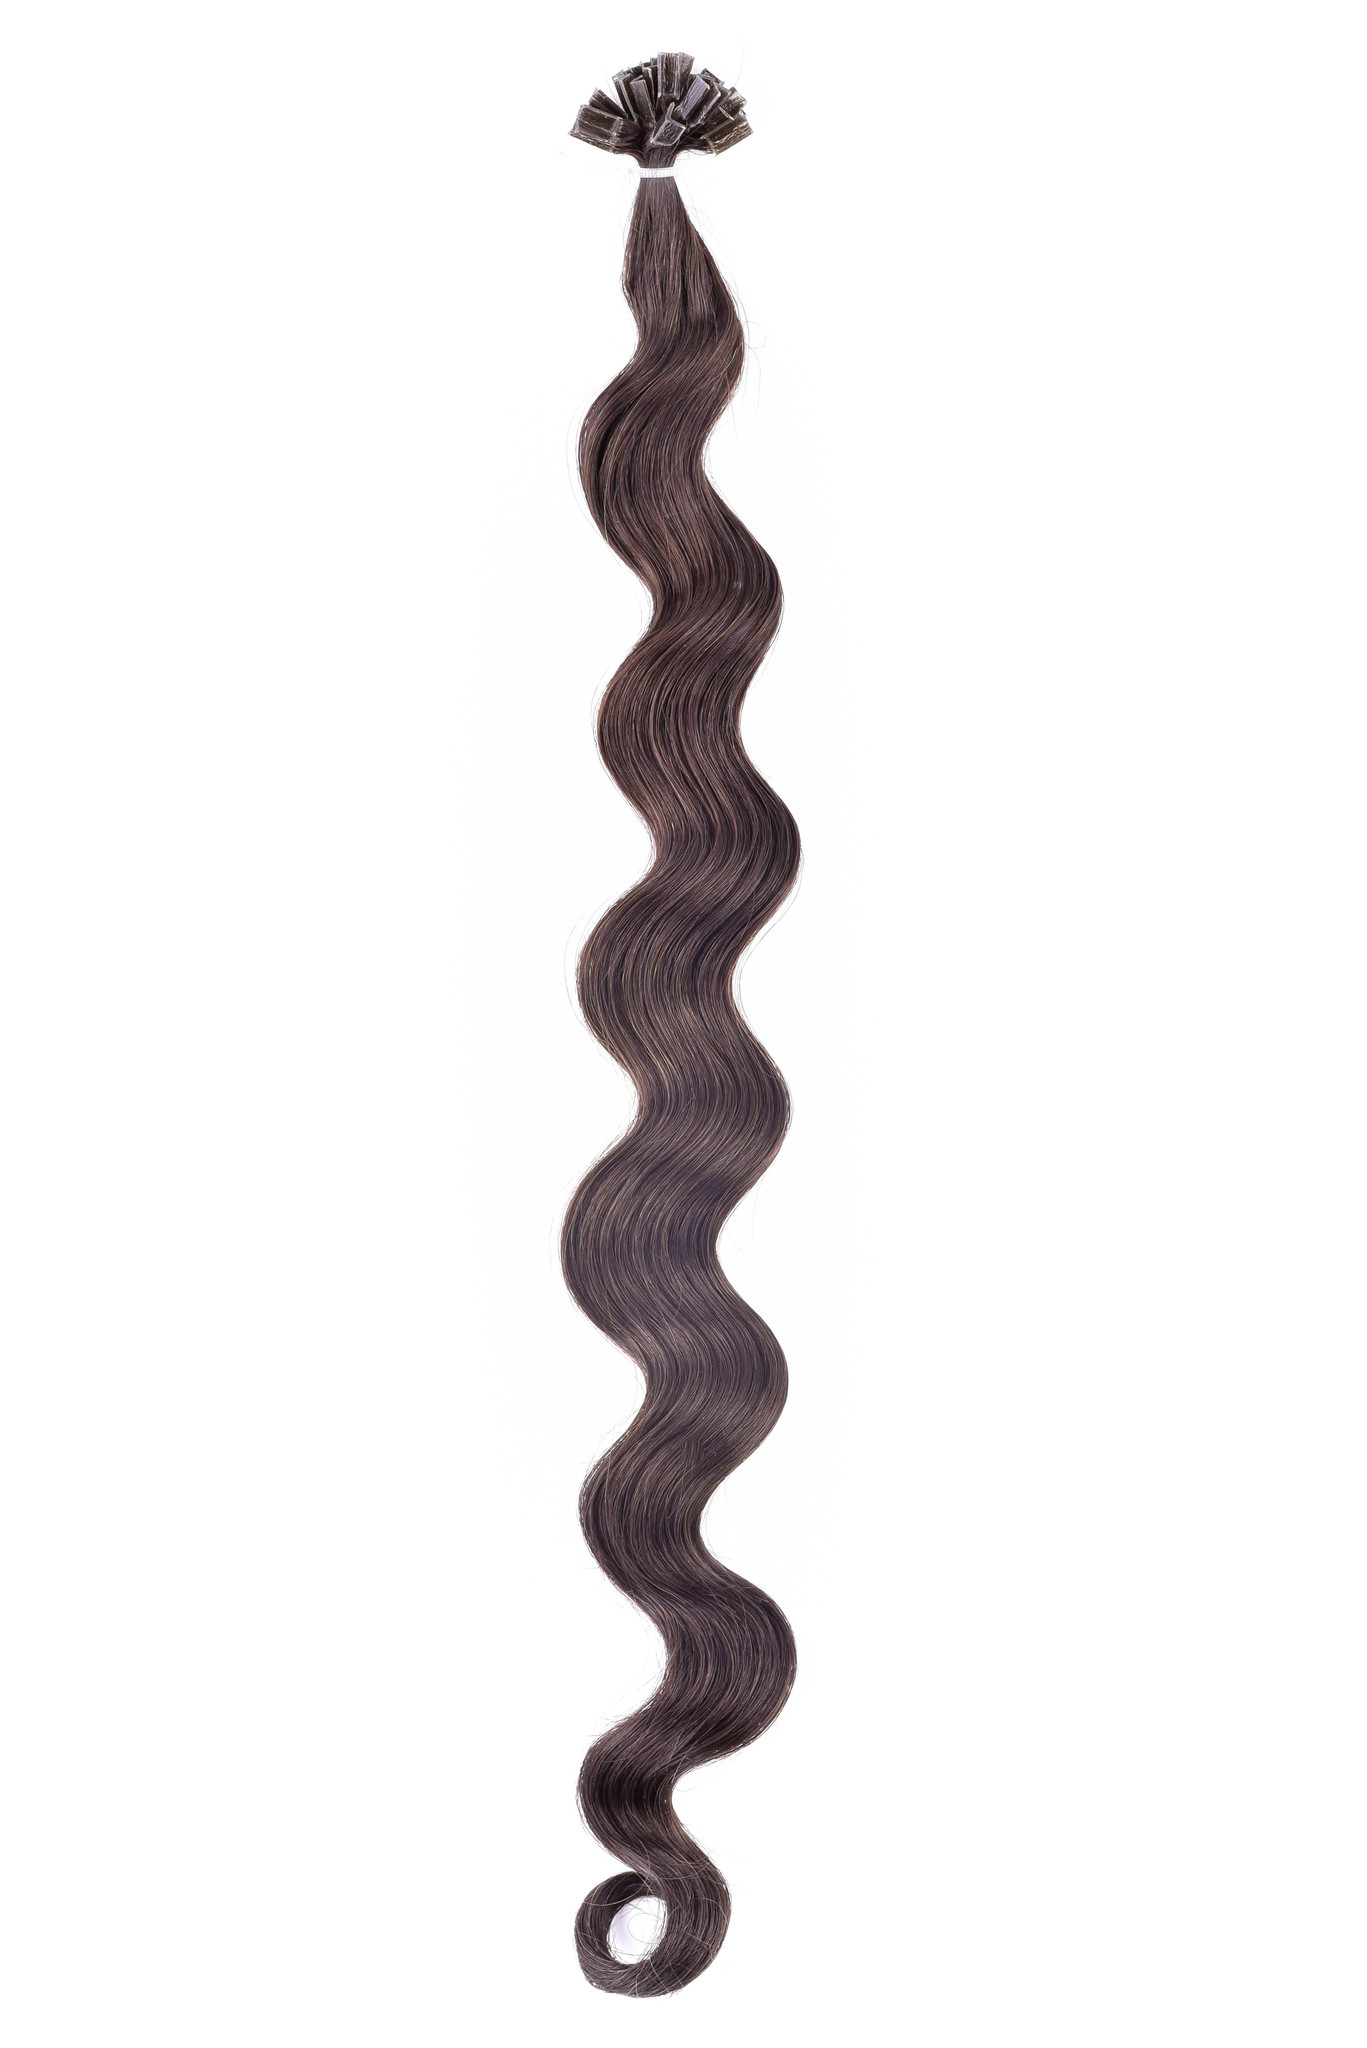 SilverFox Wax Extensions Loose Wave 55cm #8 Cinnamon